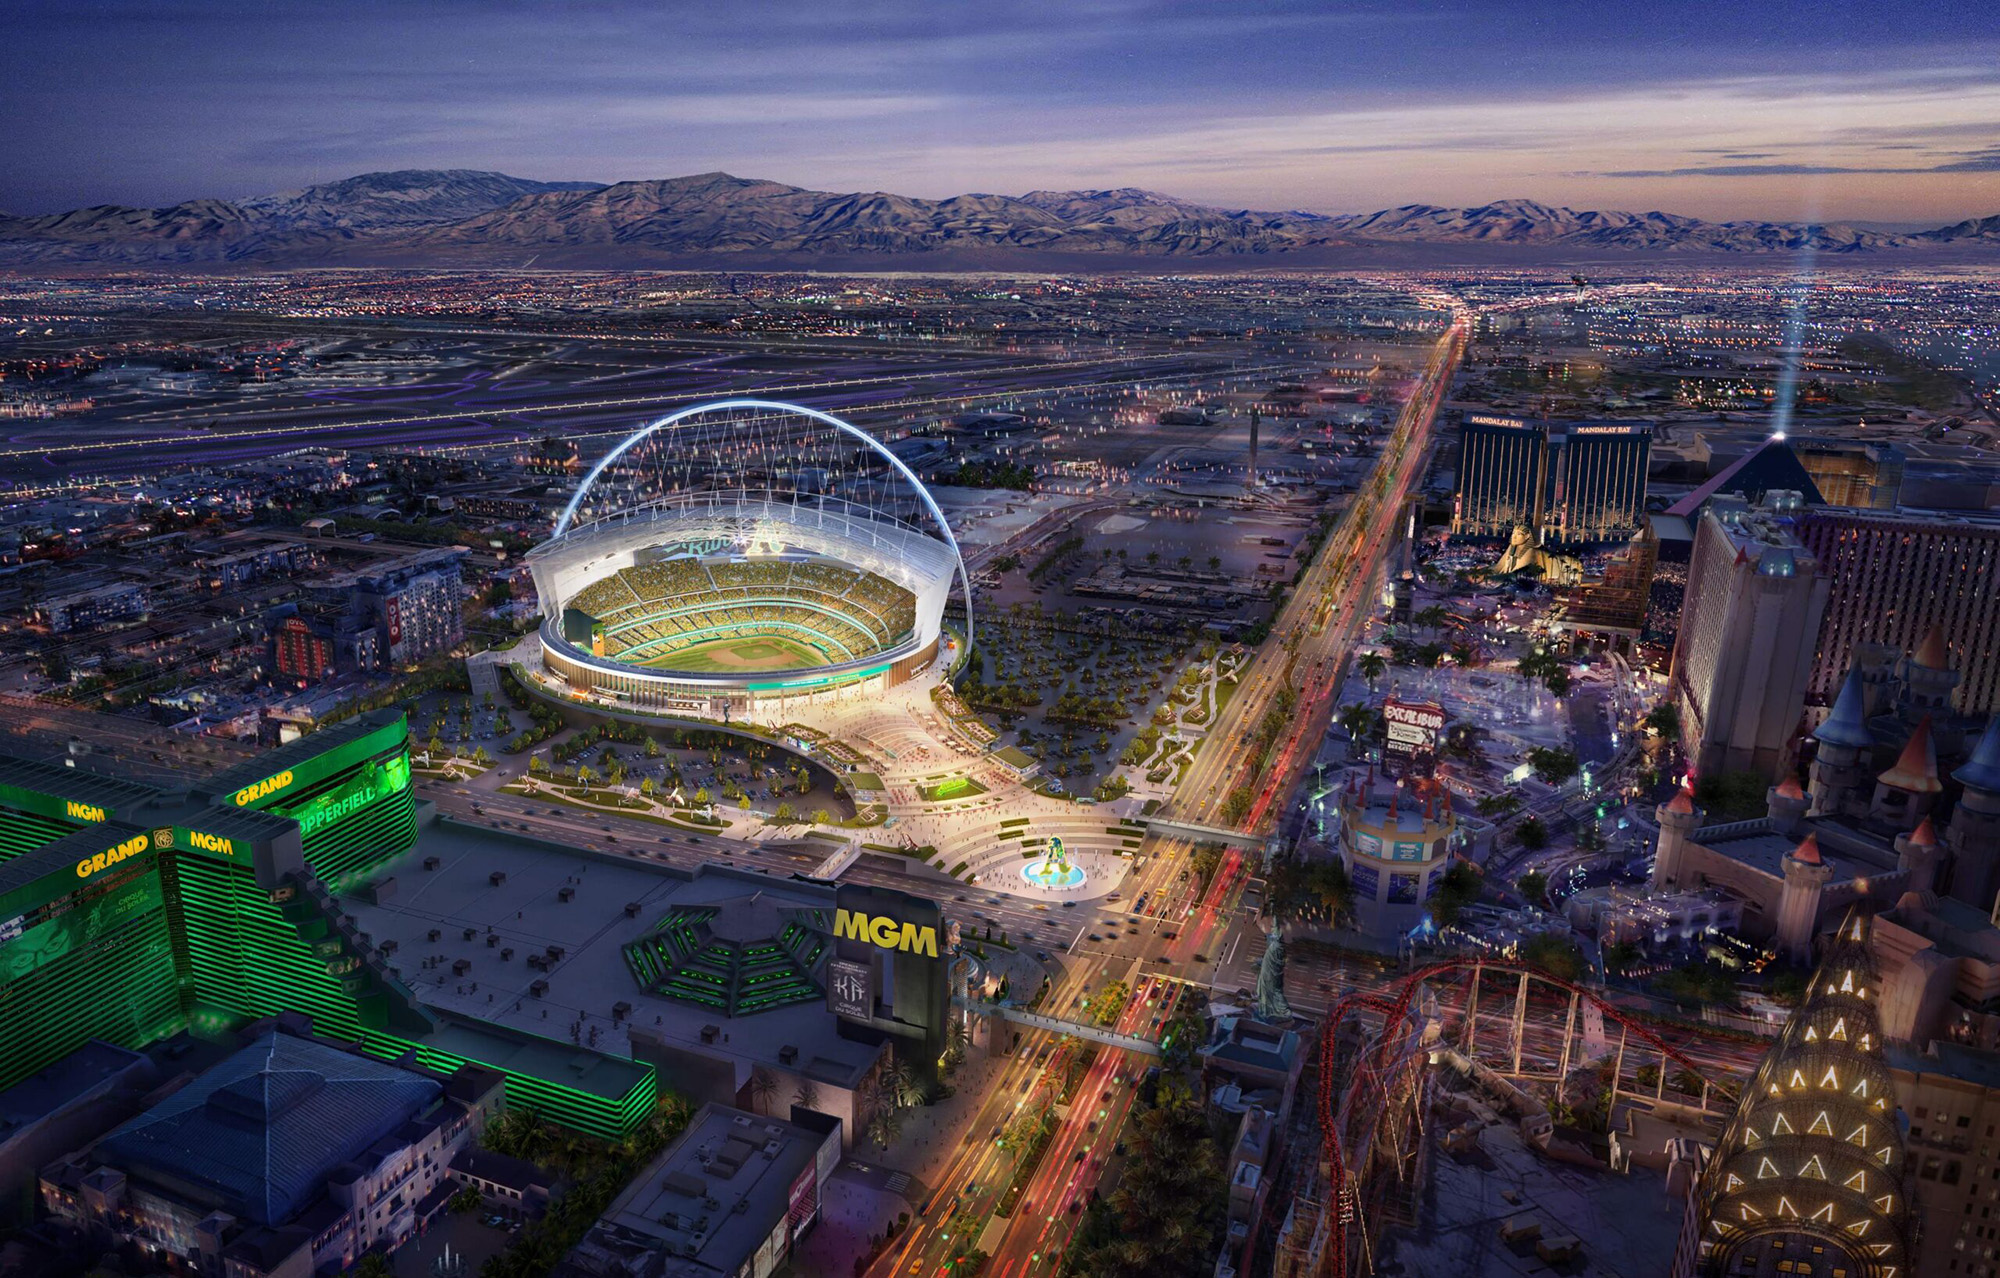 No surprise reset announced on A’s ballpark design in Las Vegas